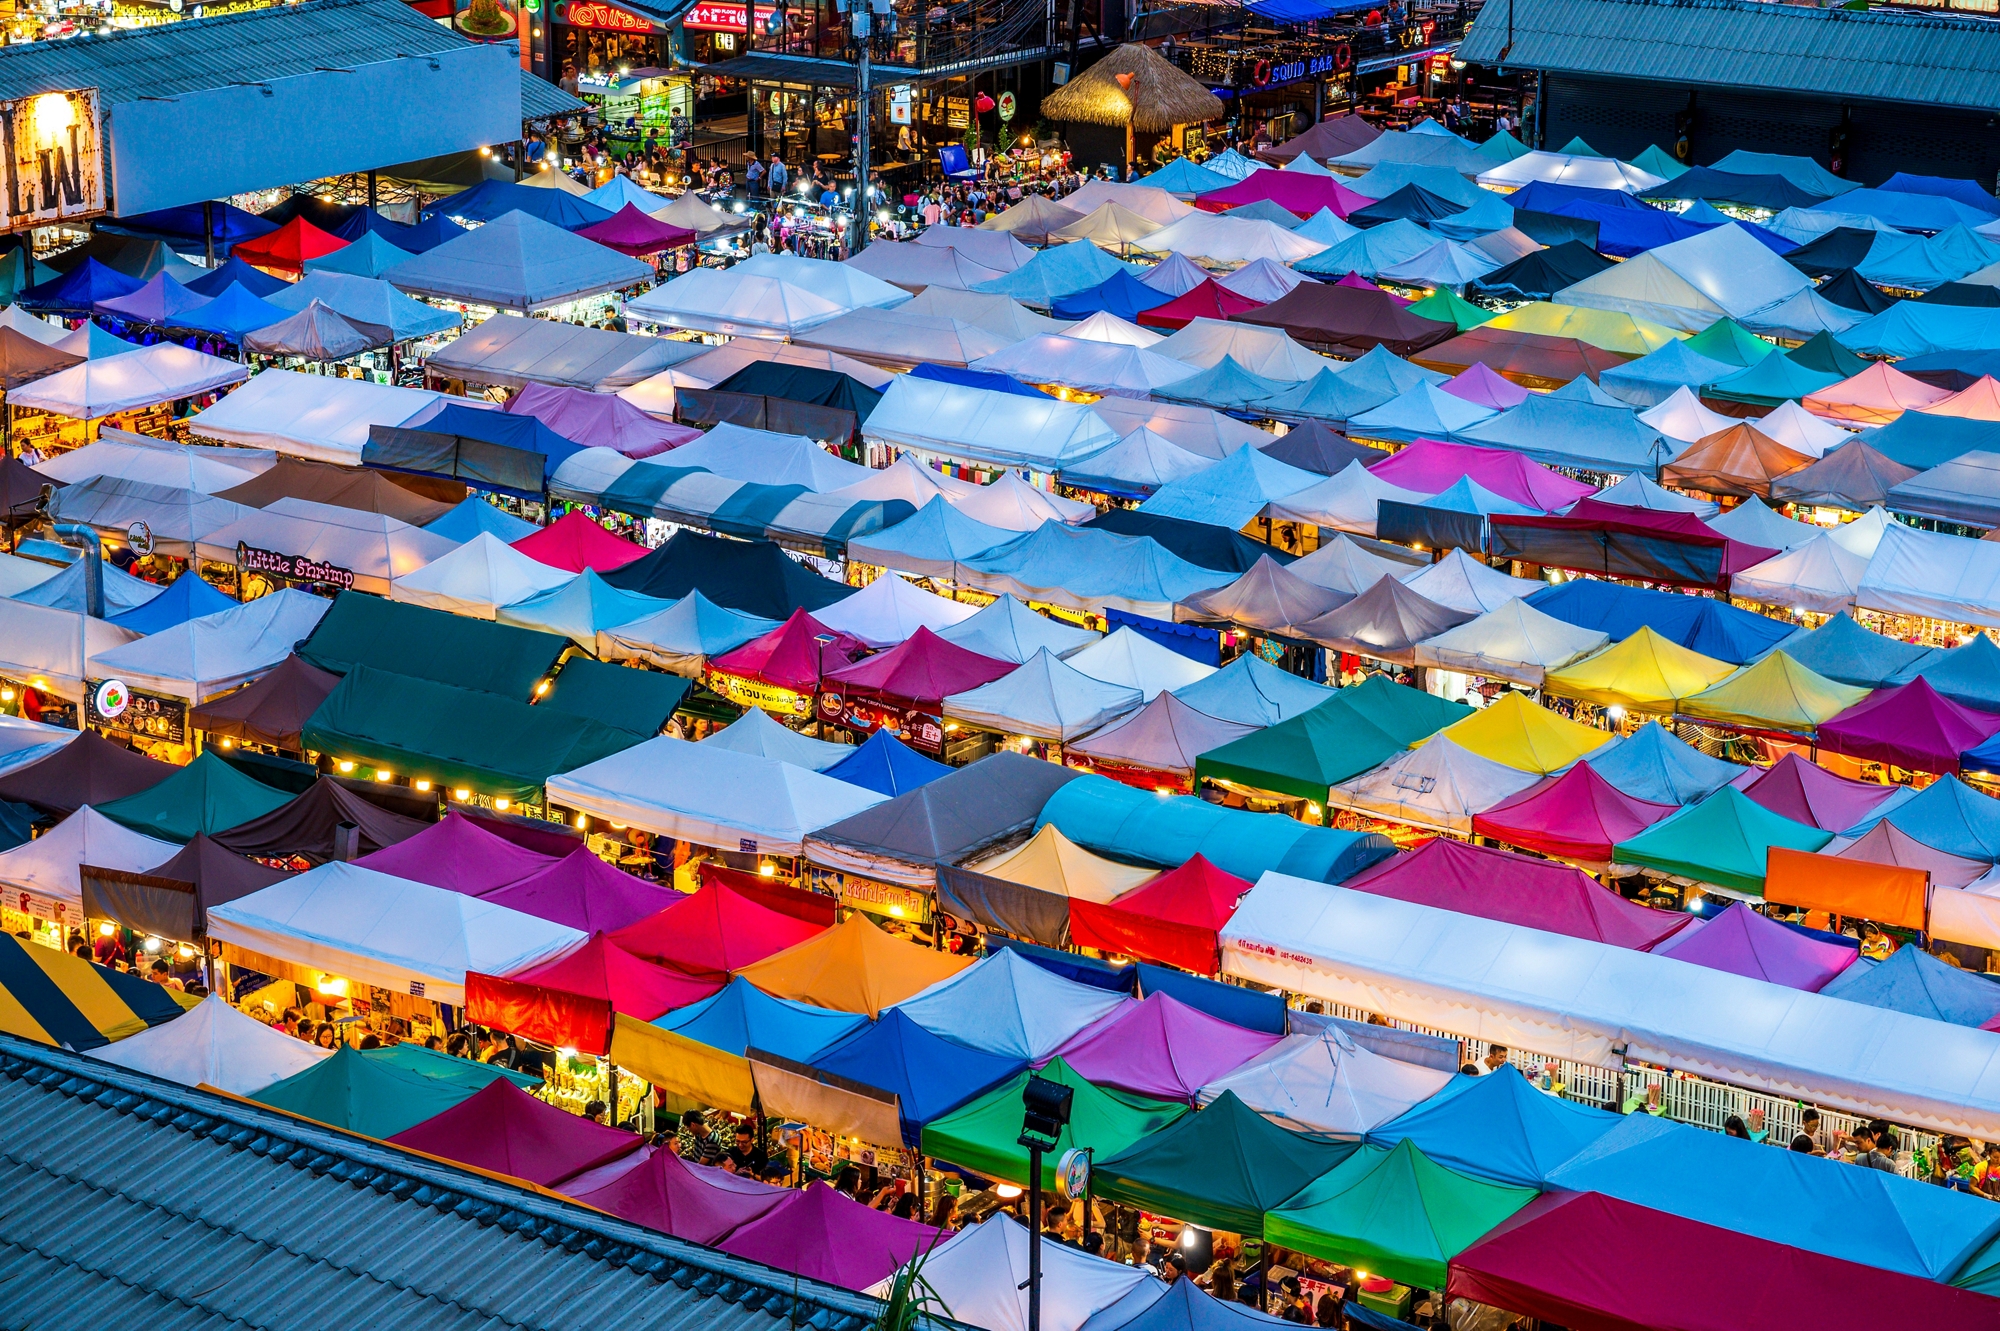 Ratchada Rot Fai Train night market in Bangkok is a famous and thriving night market in Bangkok, Thailand

People and business names visible